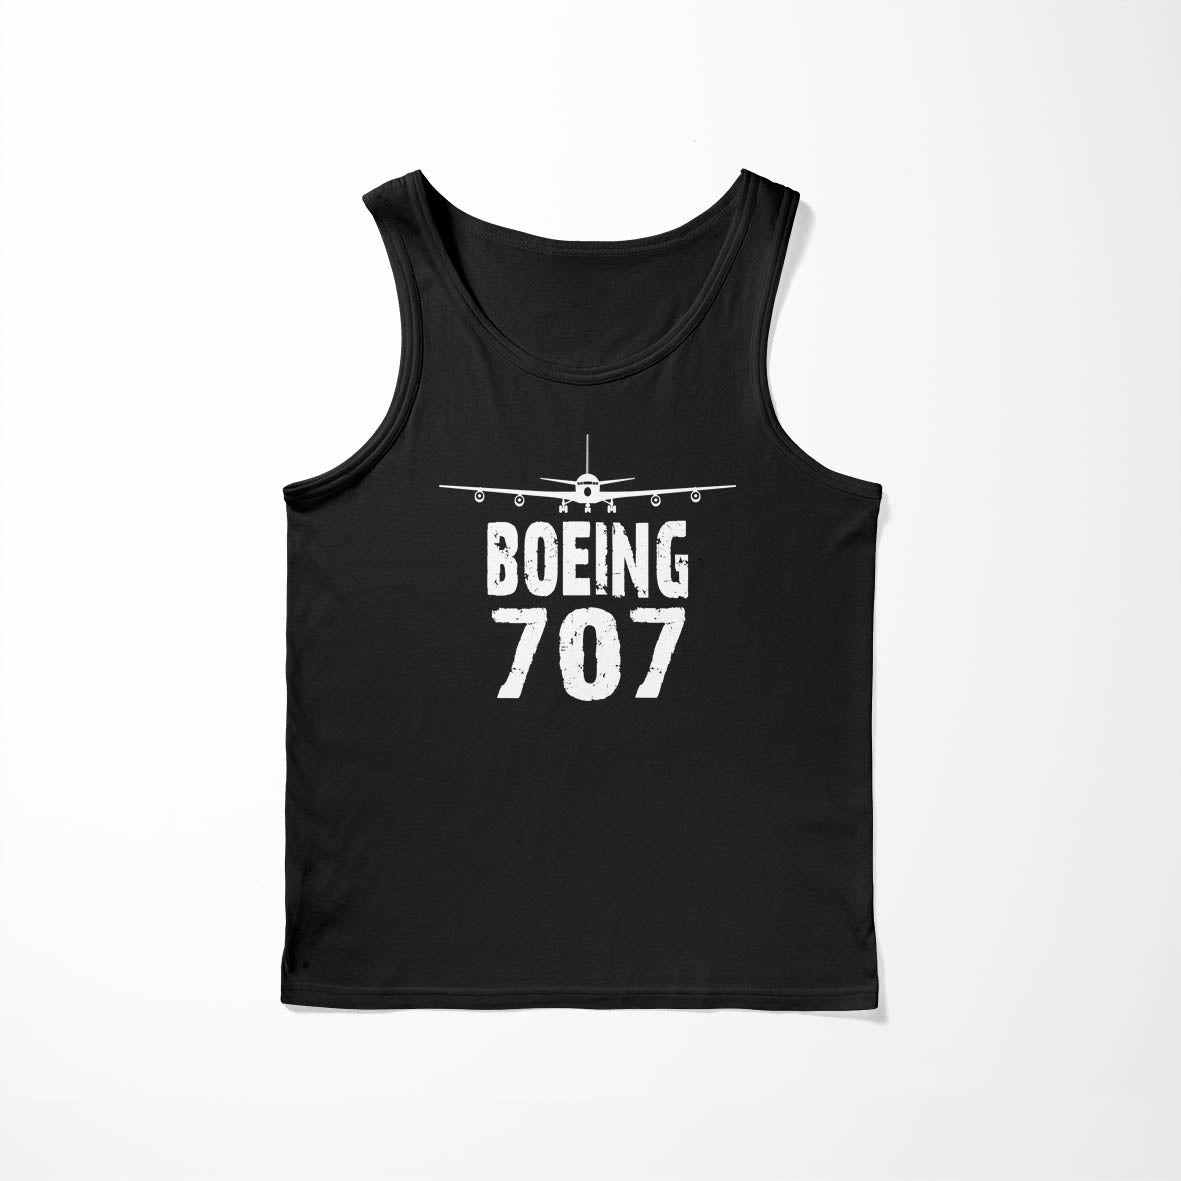 Boeing 707 & Plane Designed Tank Tops